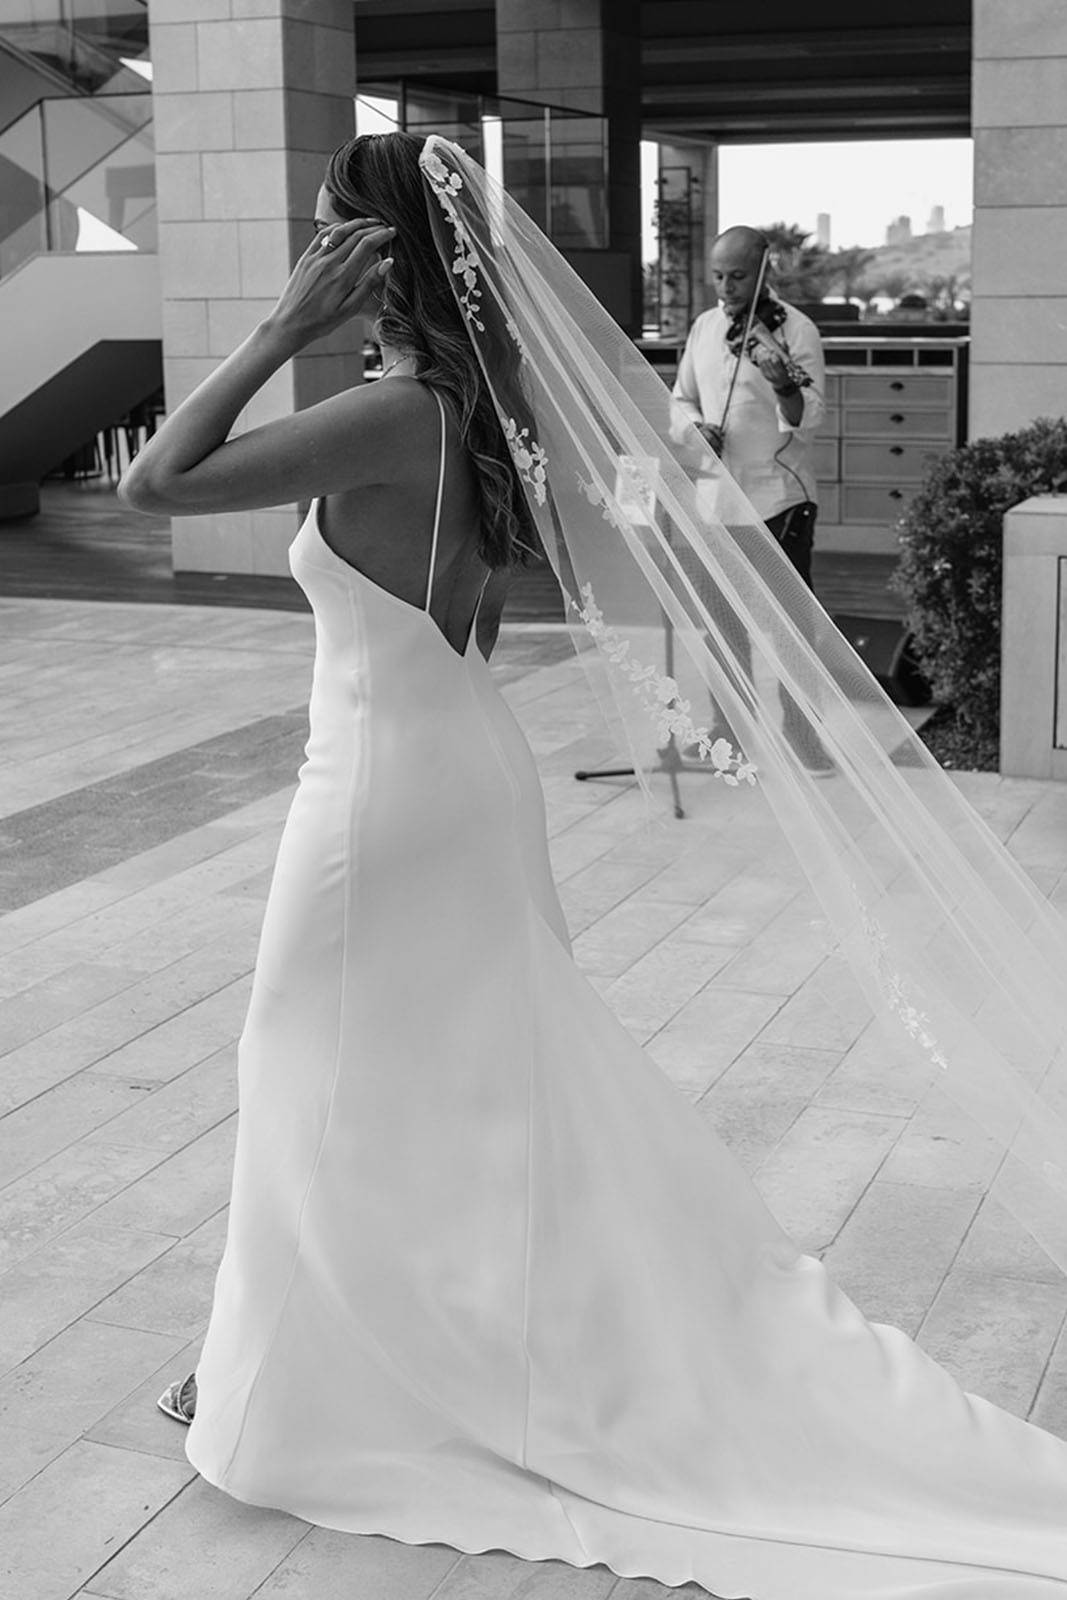 Bride's outfit, showcasing the bride's elegant back.